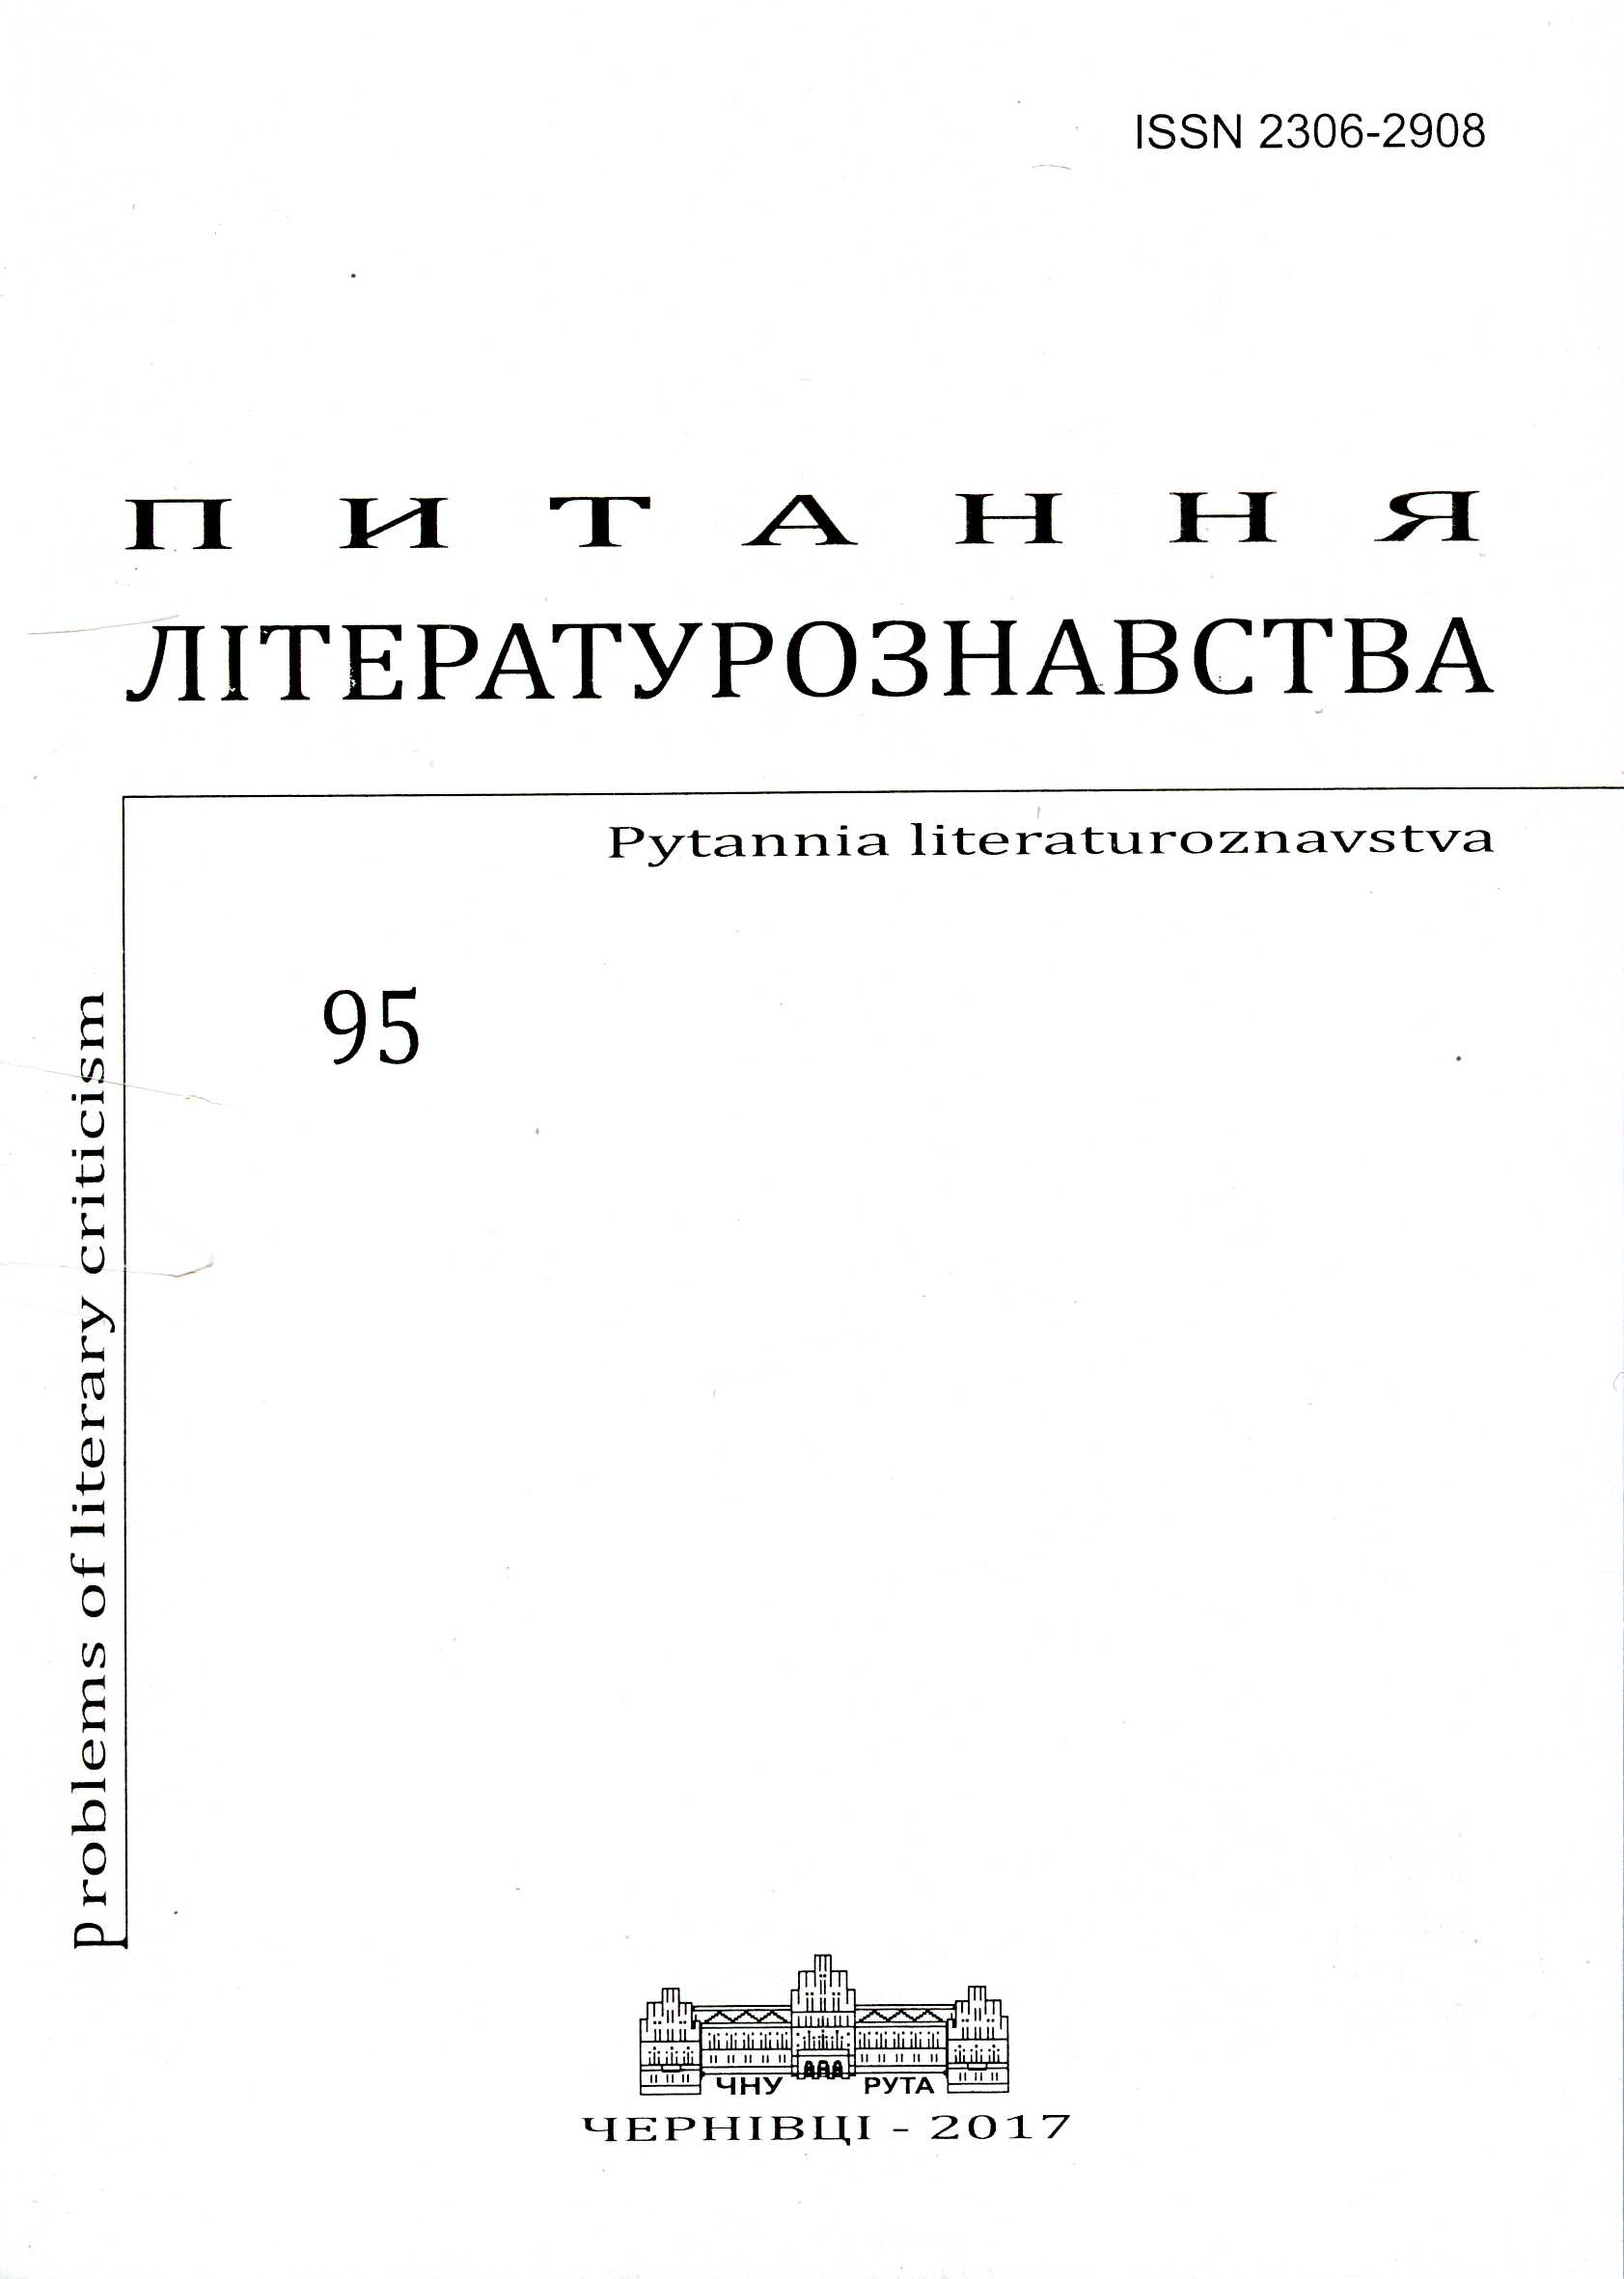 Original Minority: The Screenplay Based on the Literary Text (“Intermezzo” by Serhii Parajanov) Cover Image